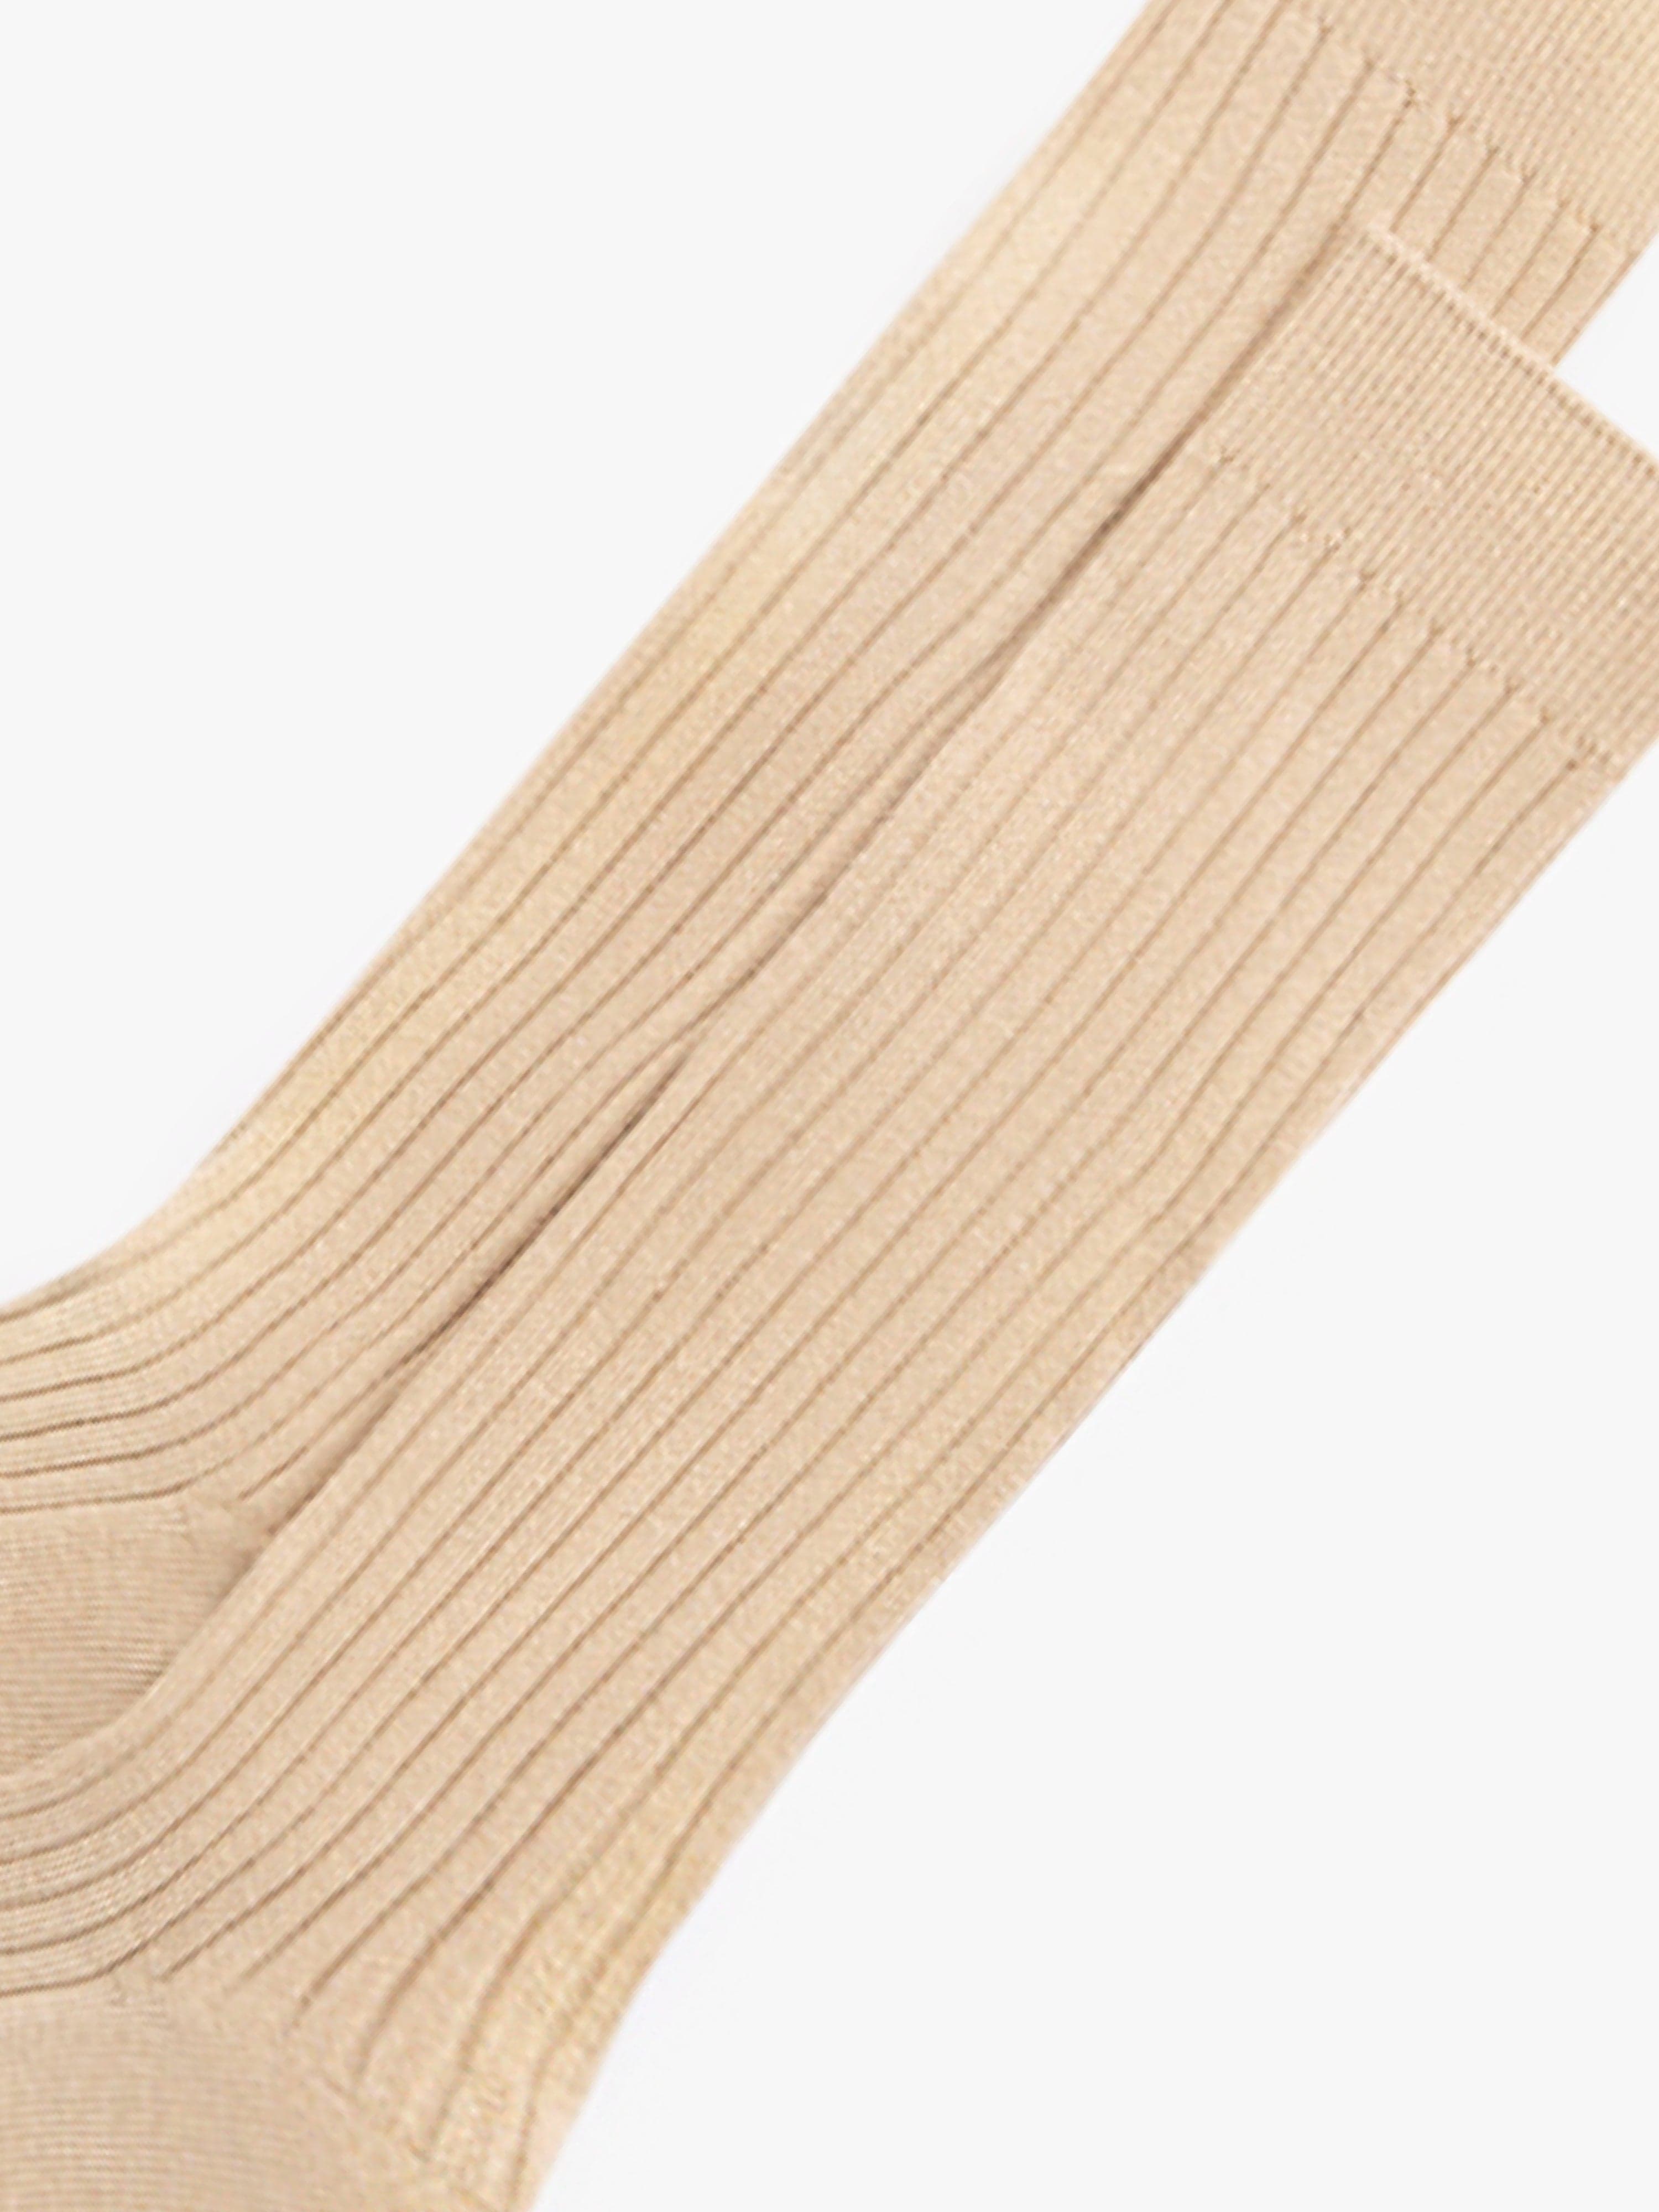 Sand Ribbed Socks (2-pack) - Grand Le Mar